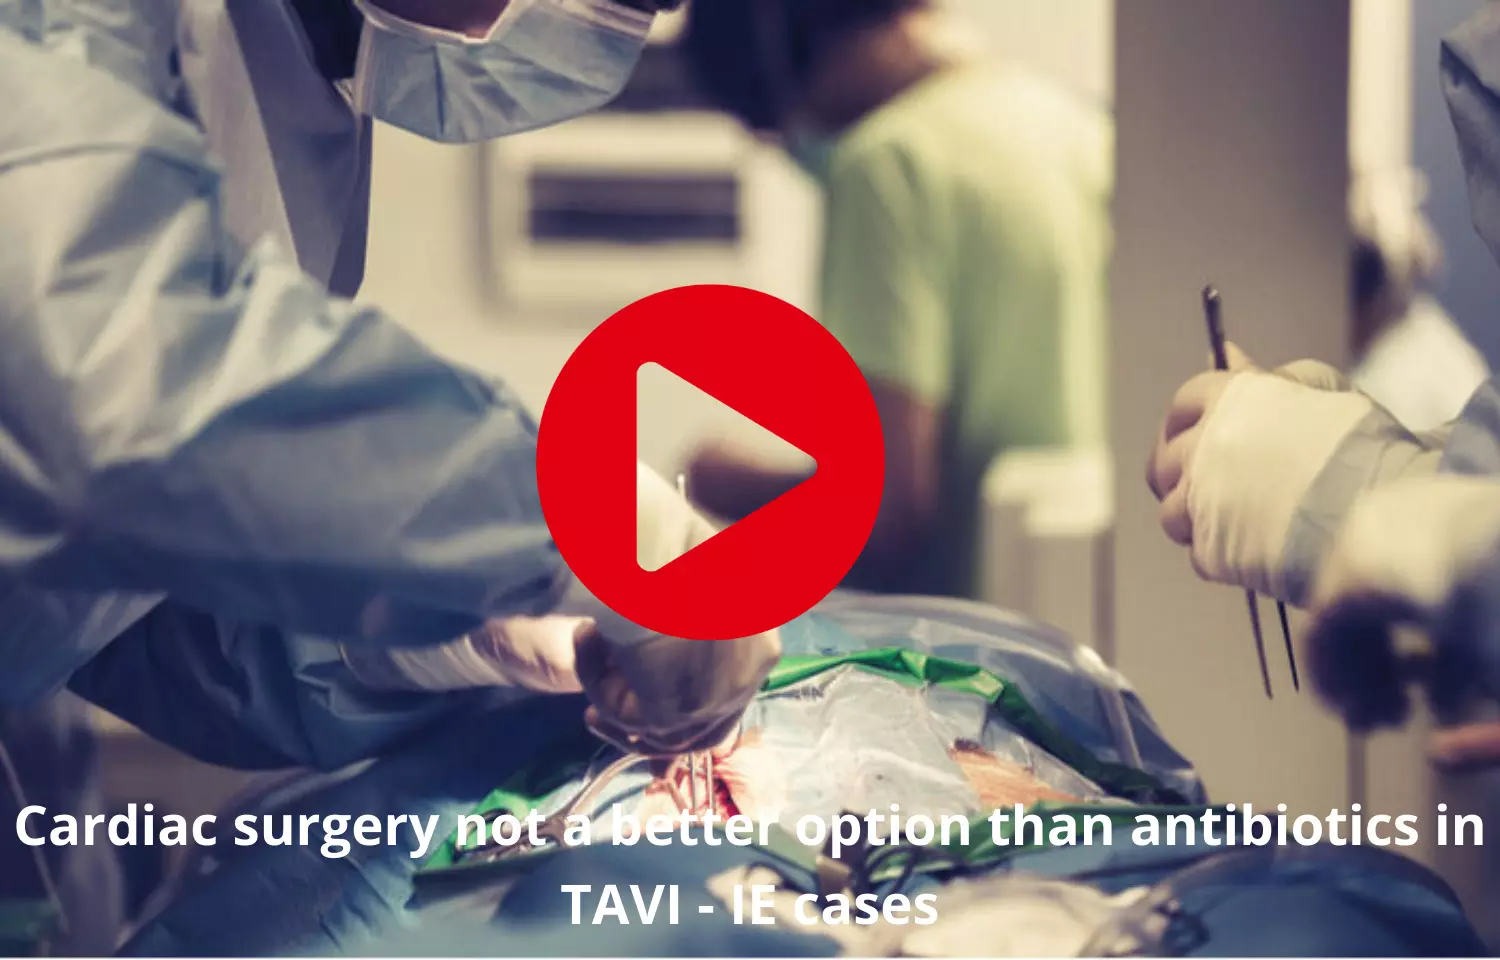 Cardiac surgery not a better option than antibiotics in TAVI - IE cases